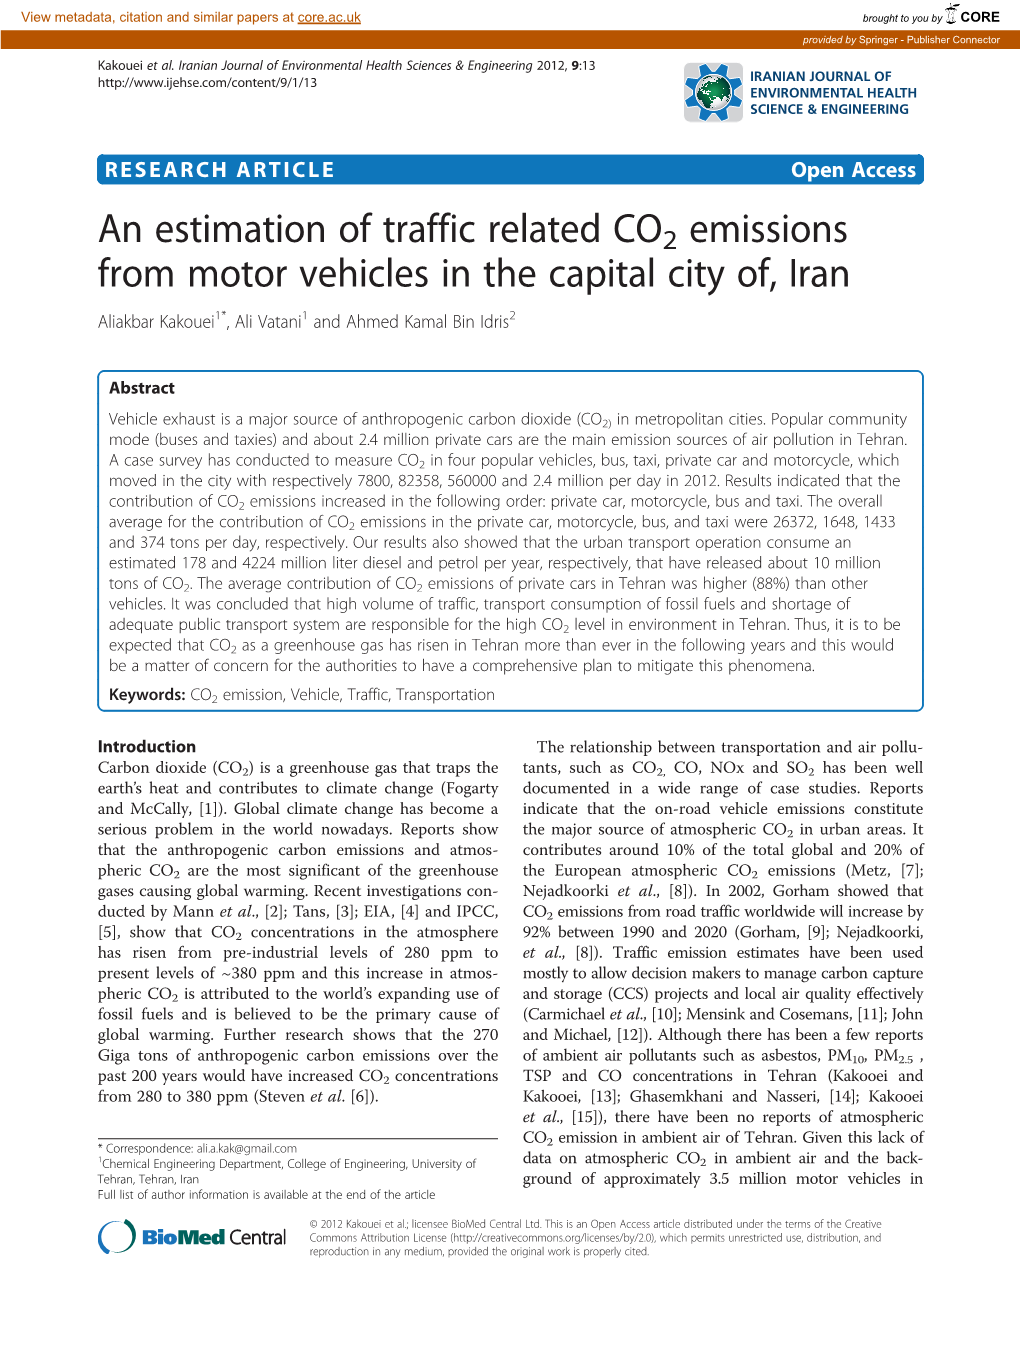 An Estimation of Traffic Related CO2 Emissions from Motor Vehicles in the Capital City Of, Iran Aliakbar Kakouei1*, Ali Vatani1 and Ahmed Kamal Bin Idris2